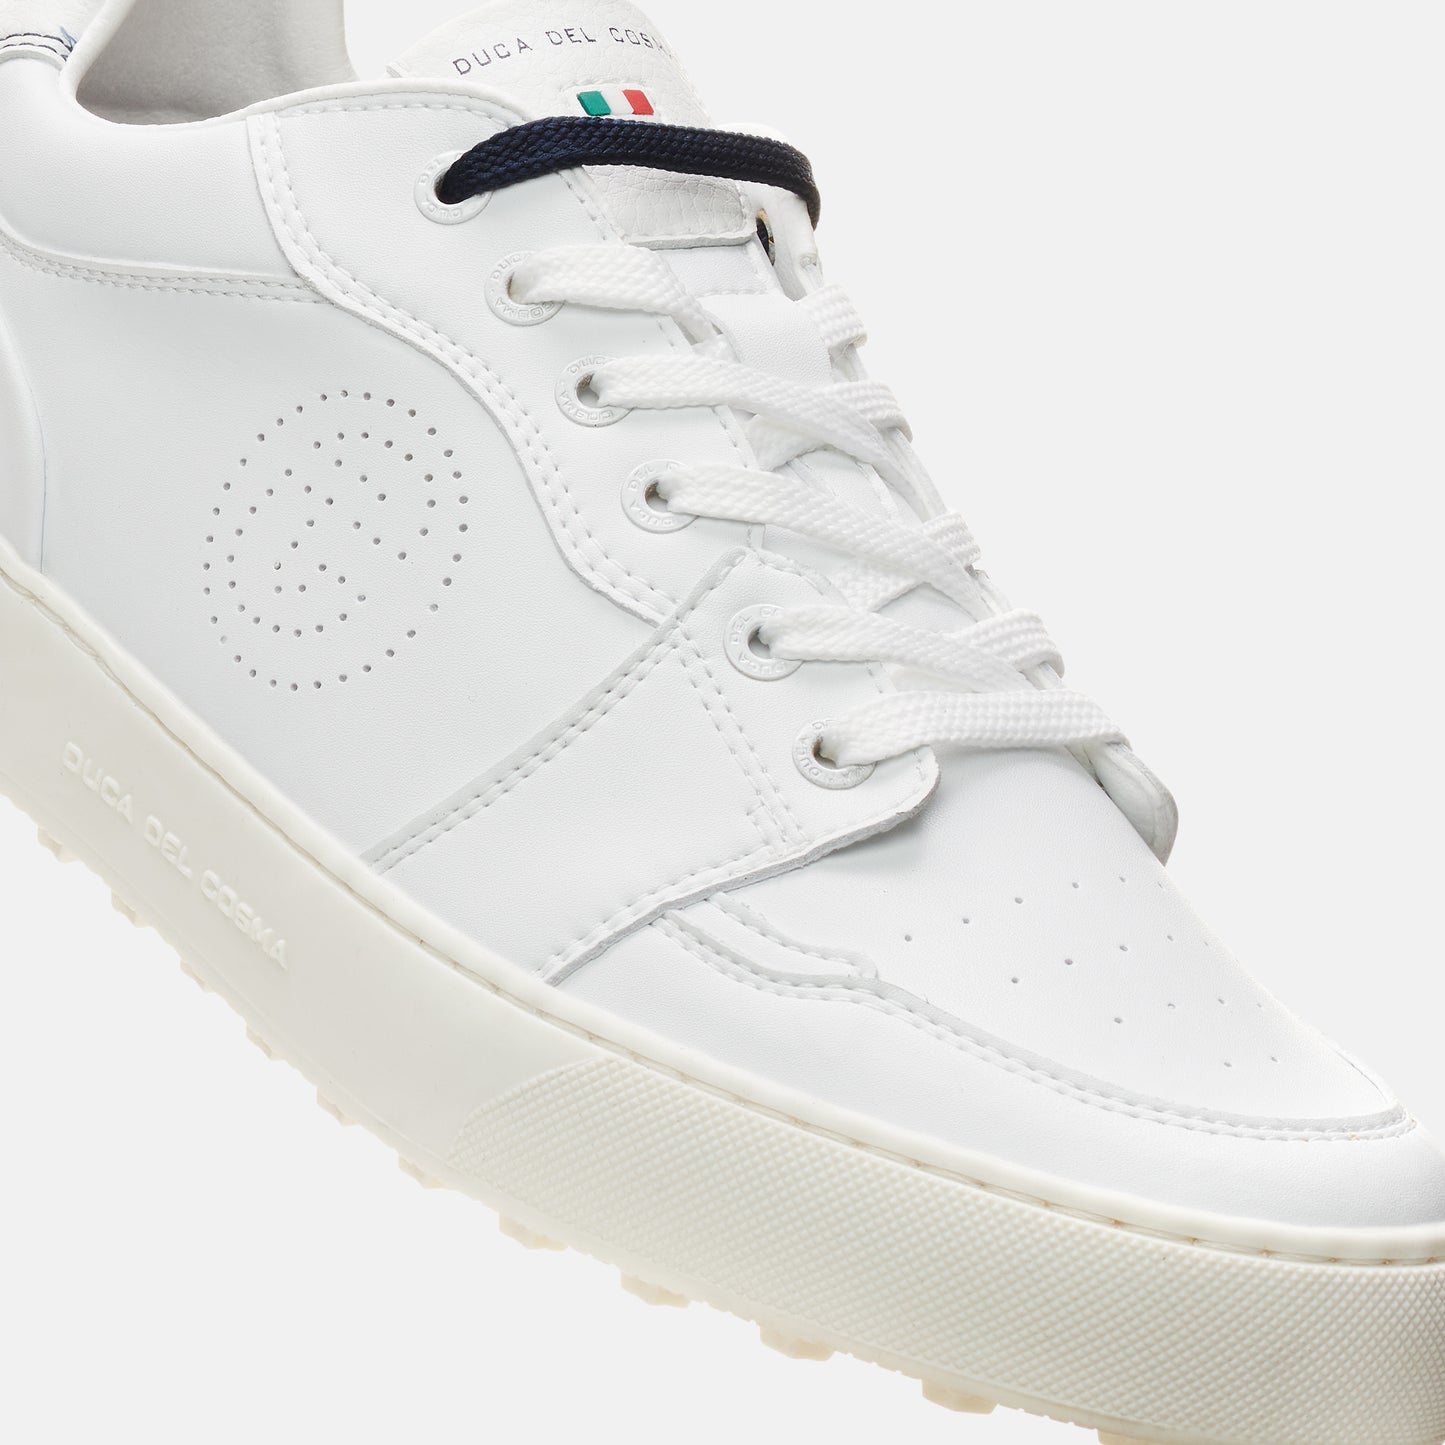 Giordano White Men's Golf Shoes